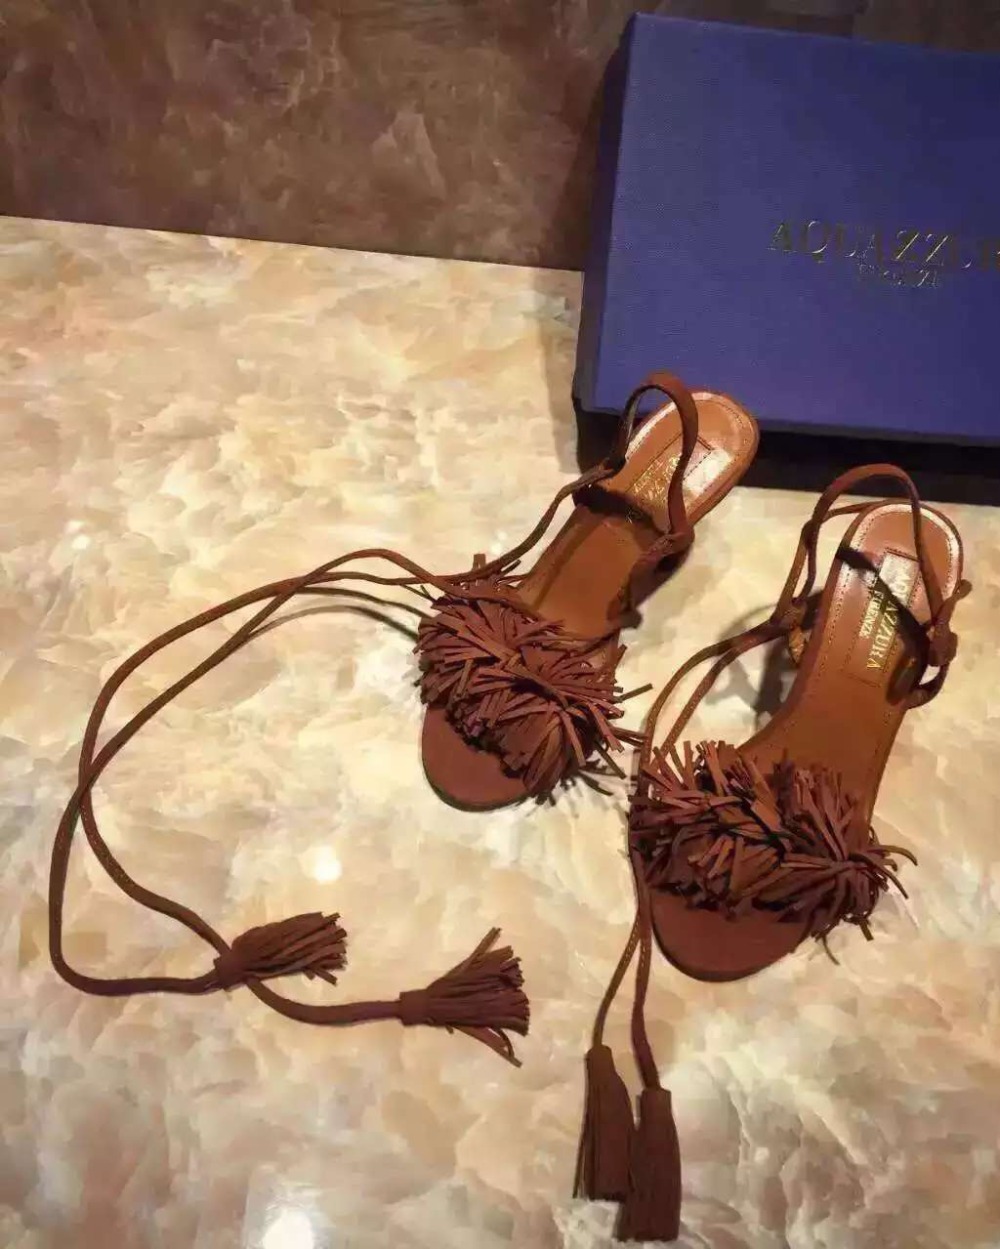 

Hot Sale-2016 Women's brand fashion wild thing suede leather high heels sandals.tassel strap high heel tassel sandals party pumps, Yellow